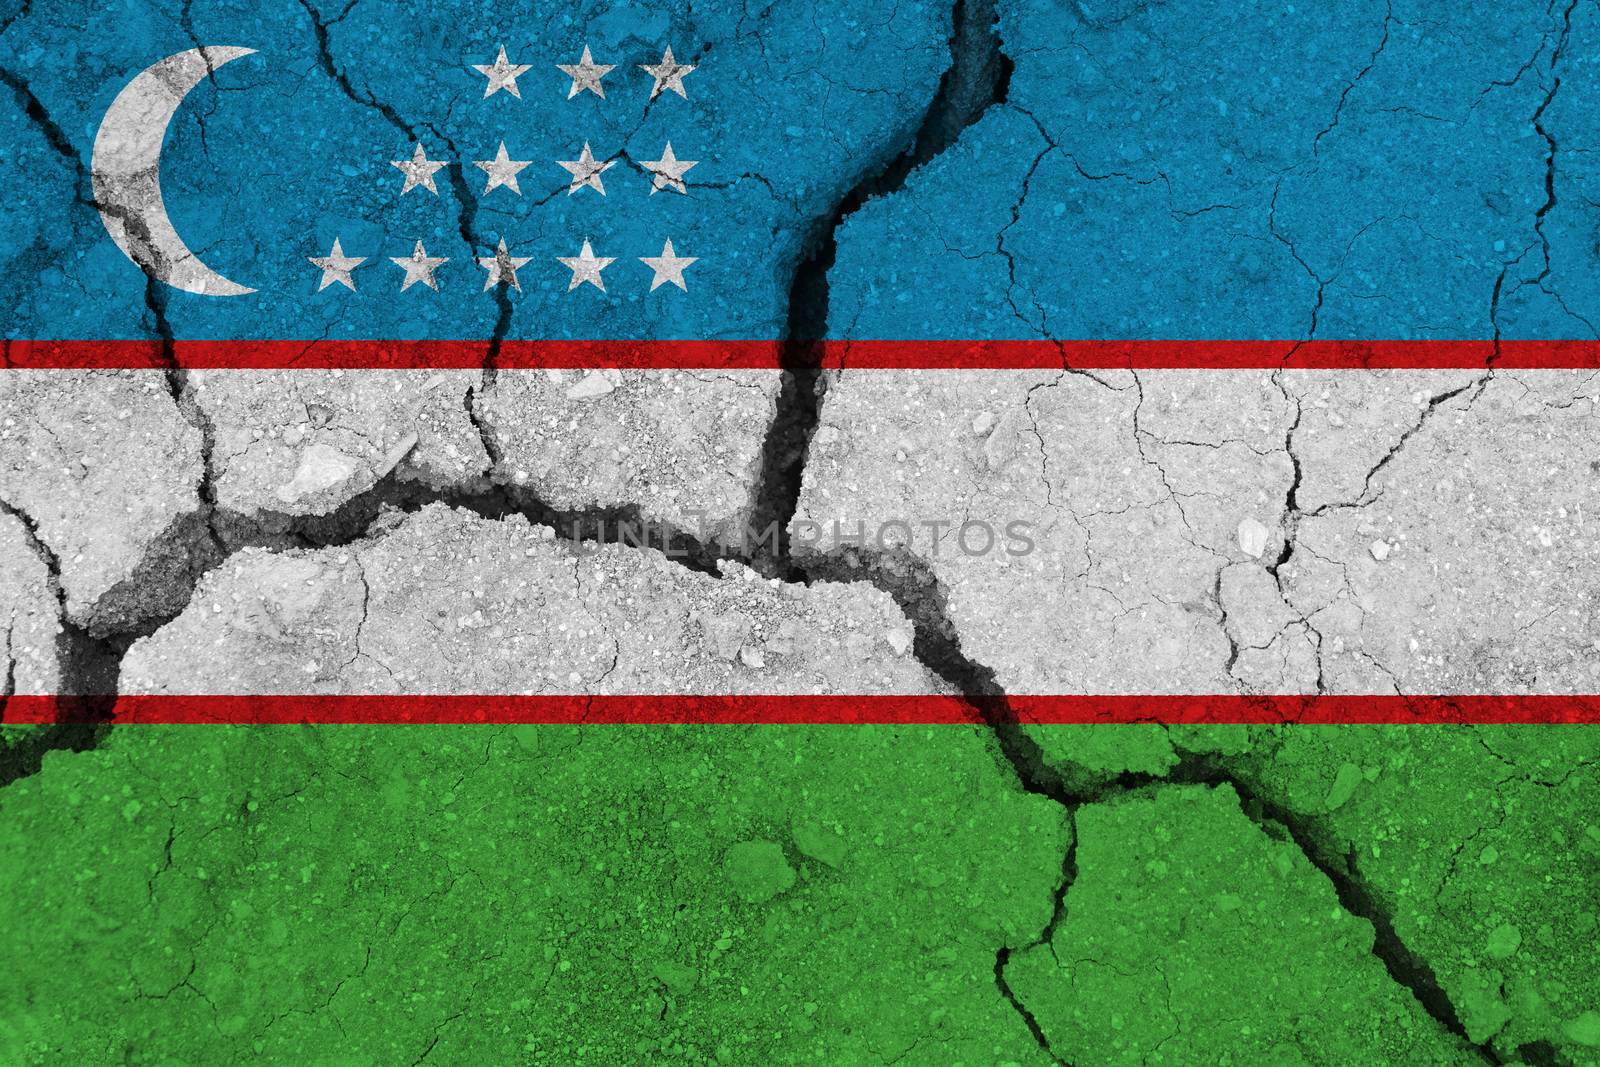 Uzbekistan flag on the cracked earth. National flag of Uzbekistan. Earthquake or drought concept